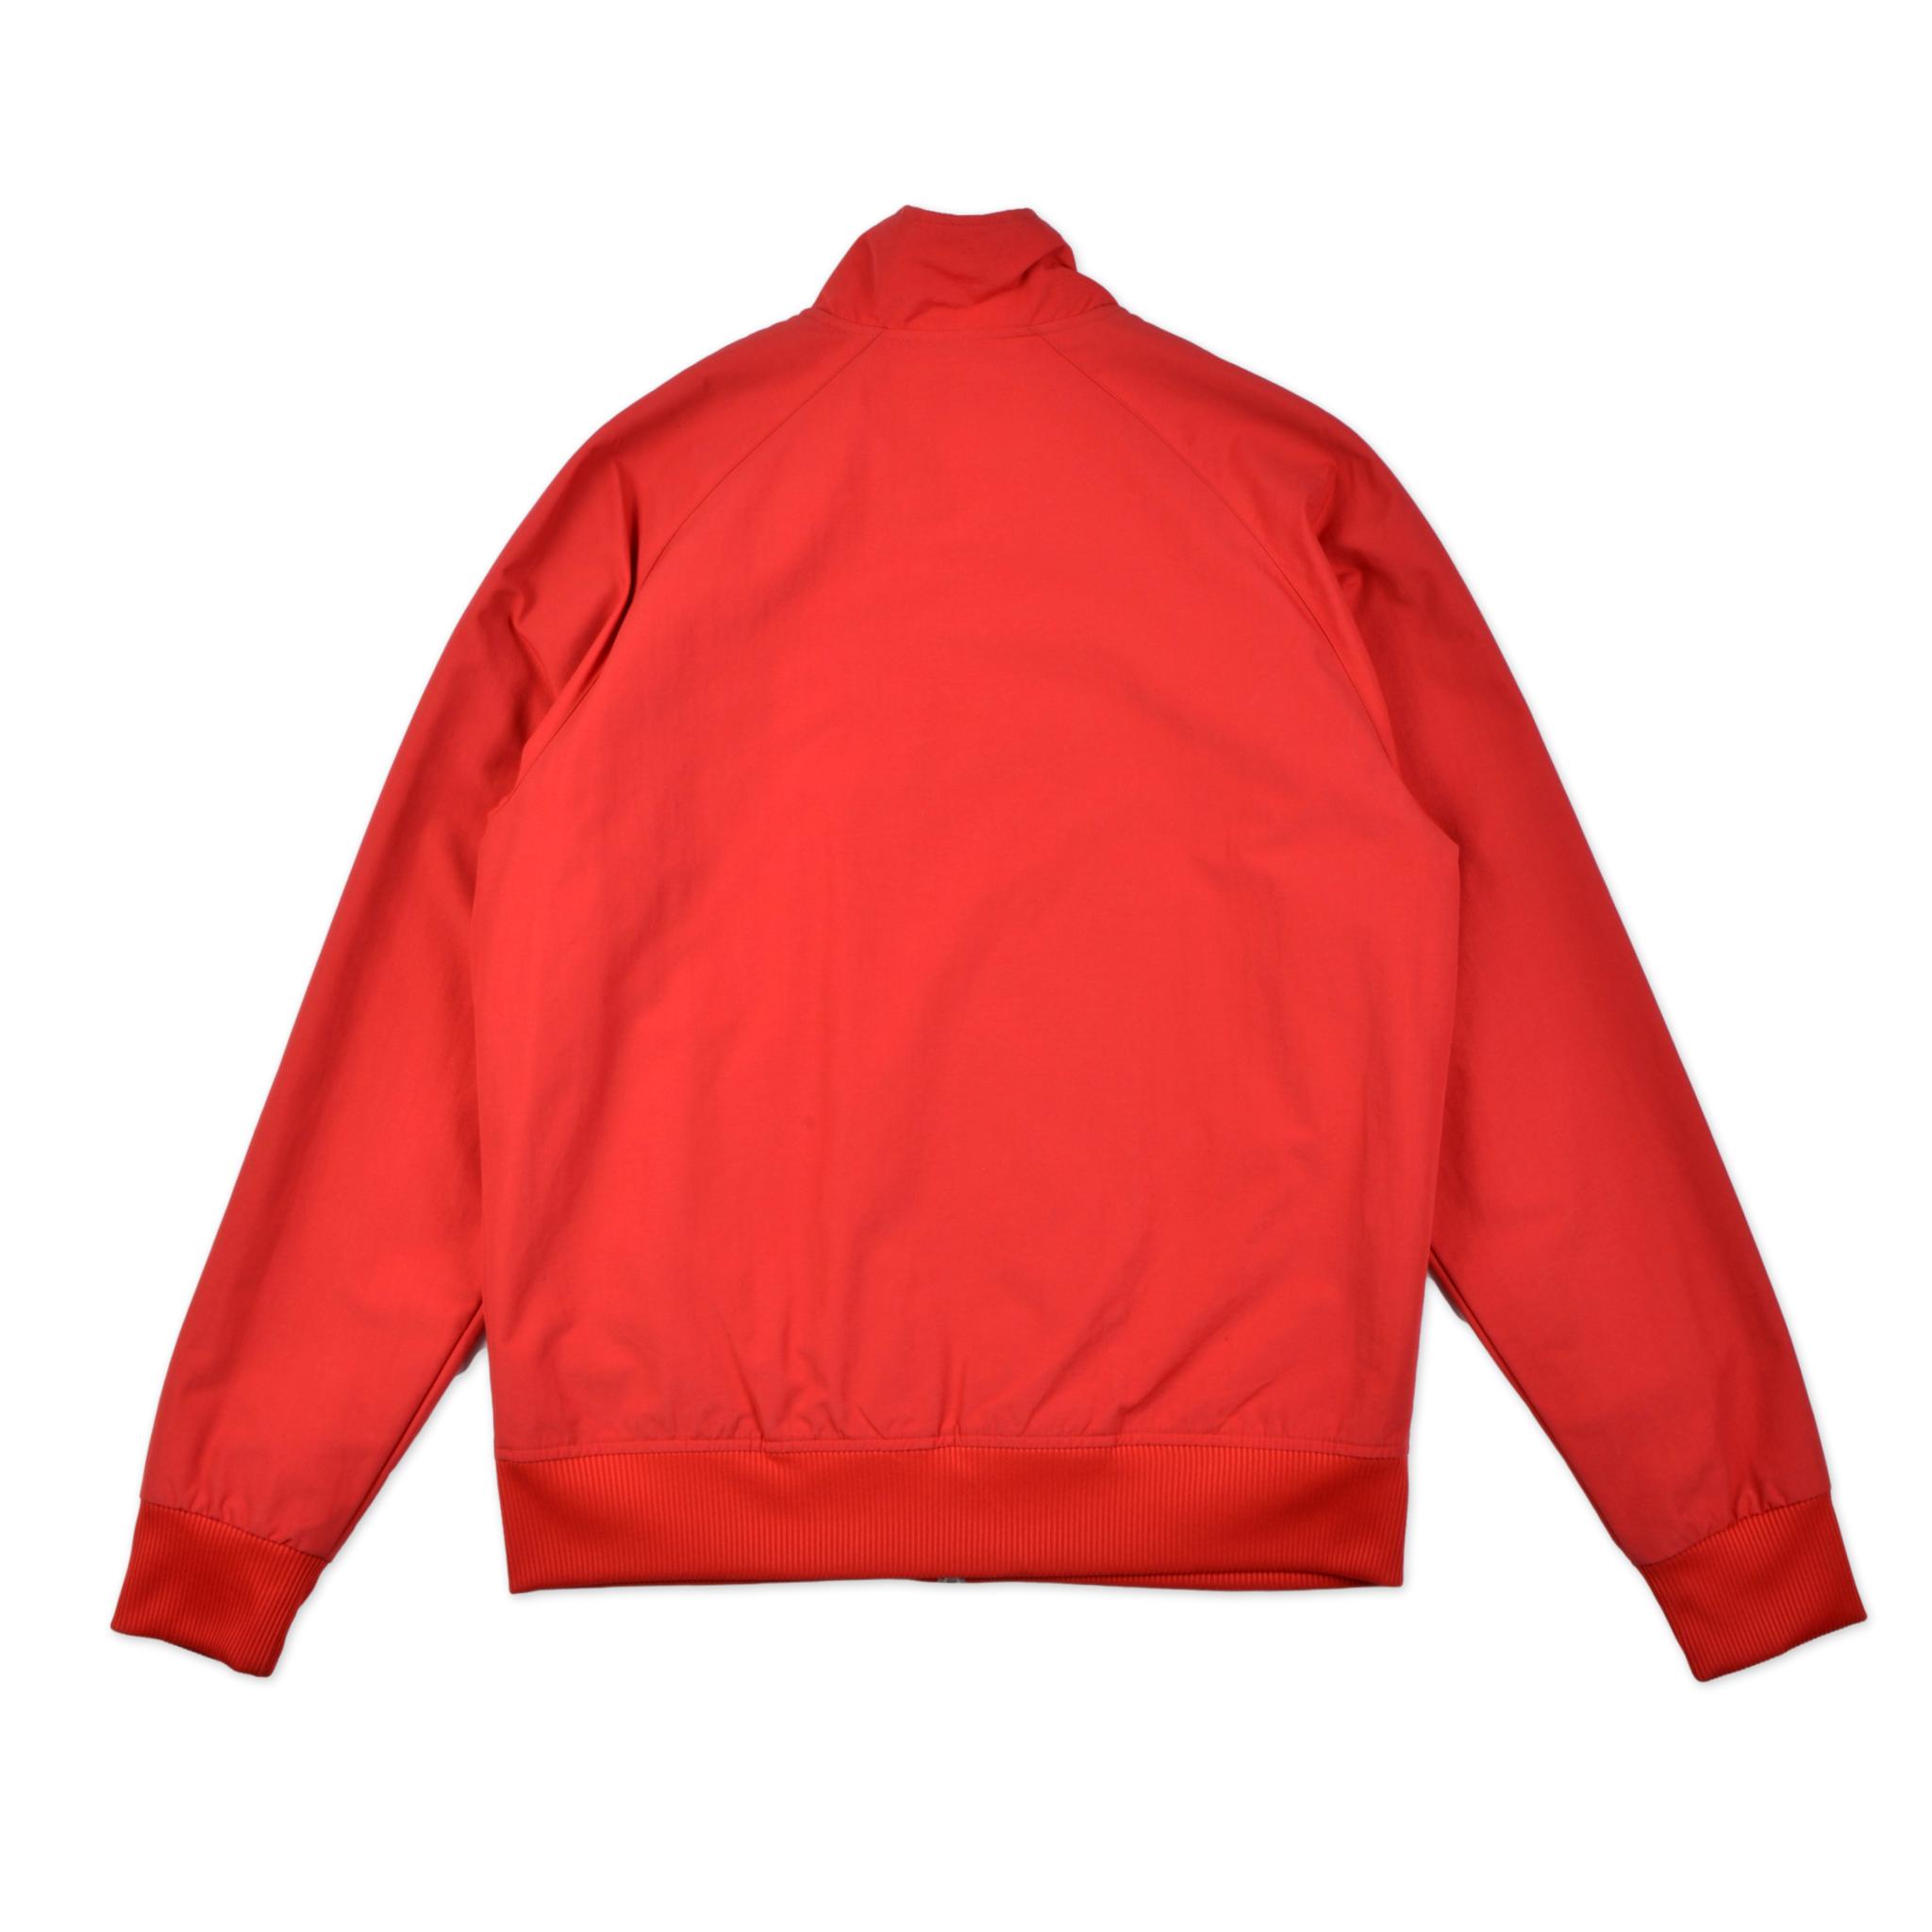 Carhartt windbreaker full zip jacket red